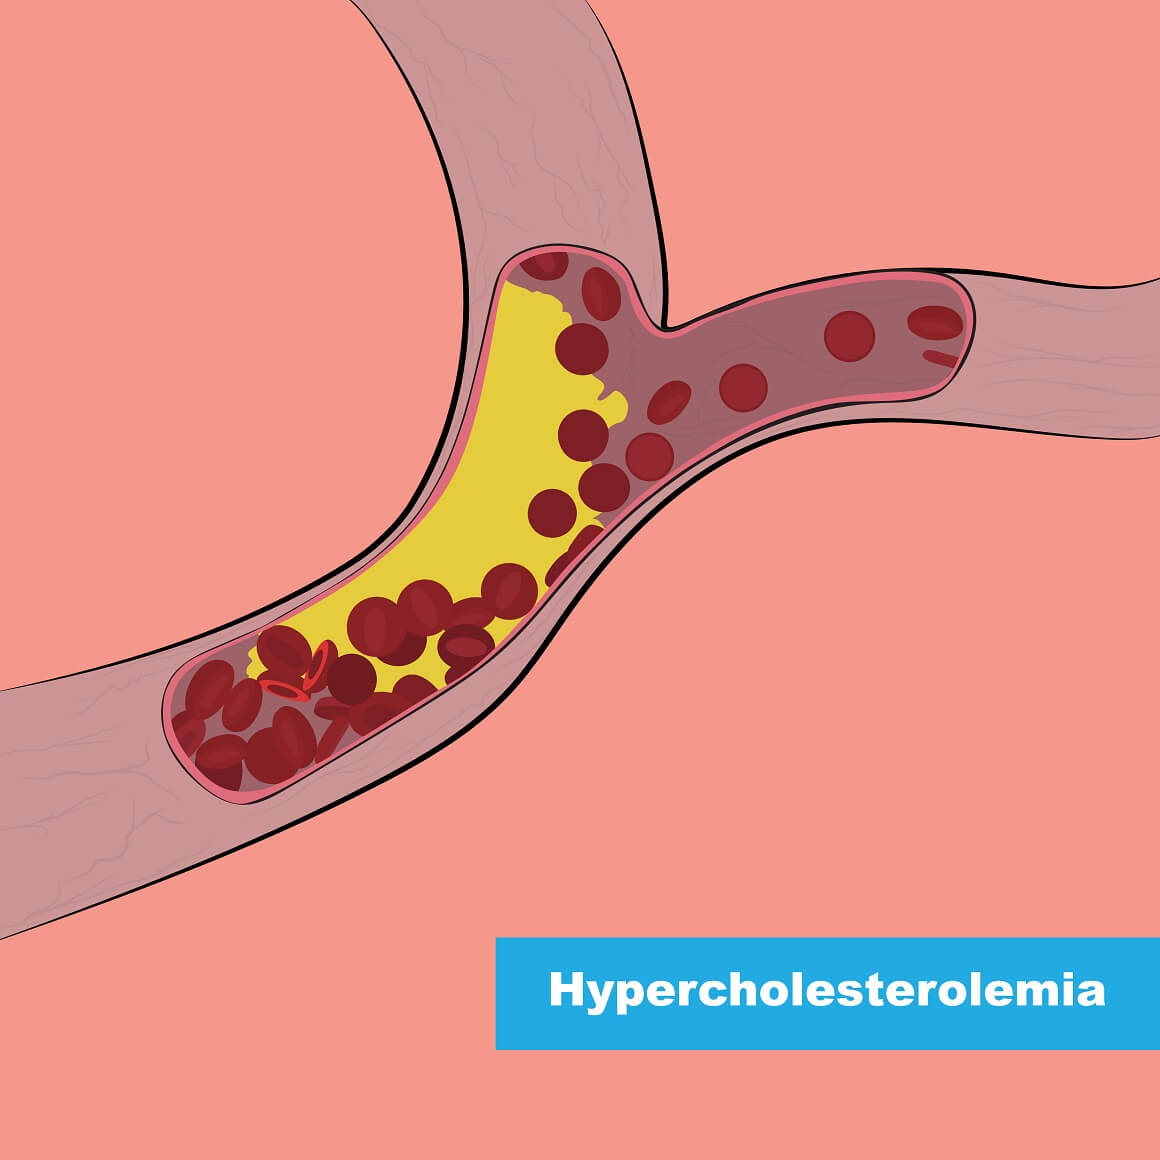 Uzroci hiperkolesterolemije